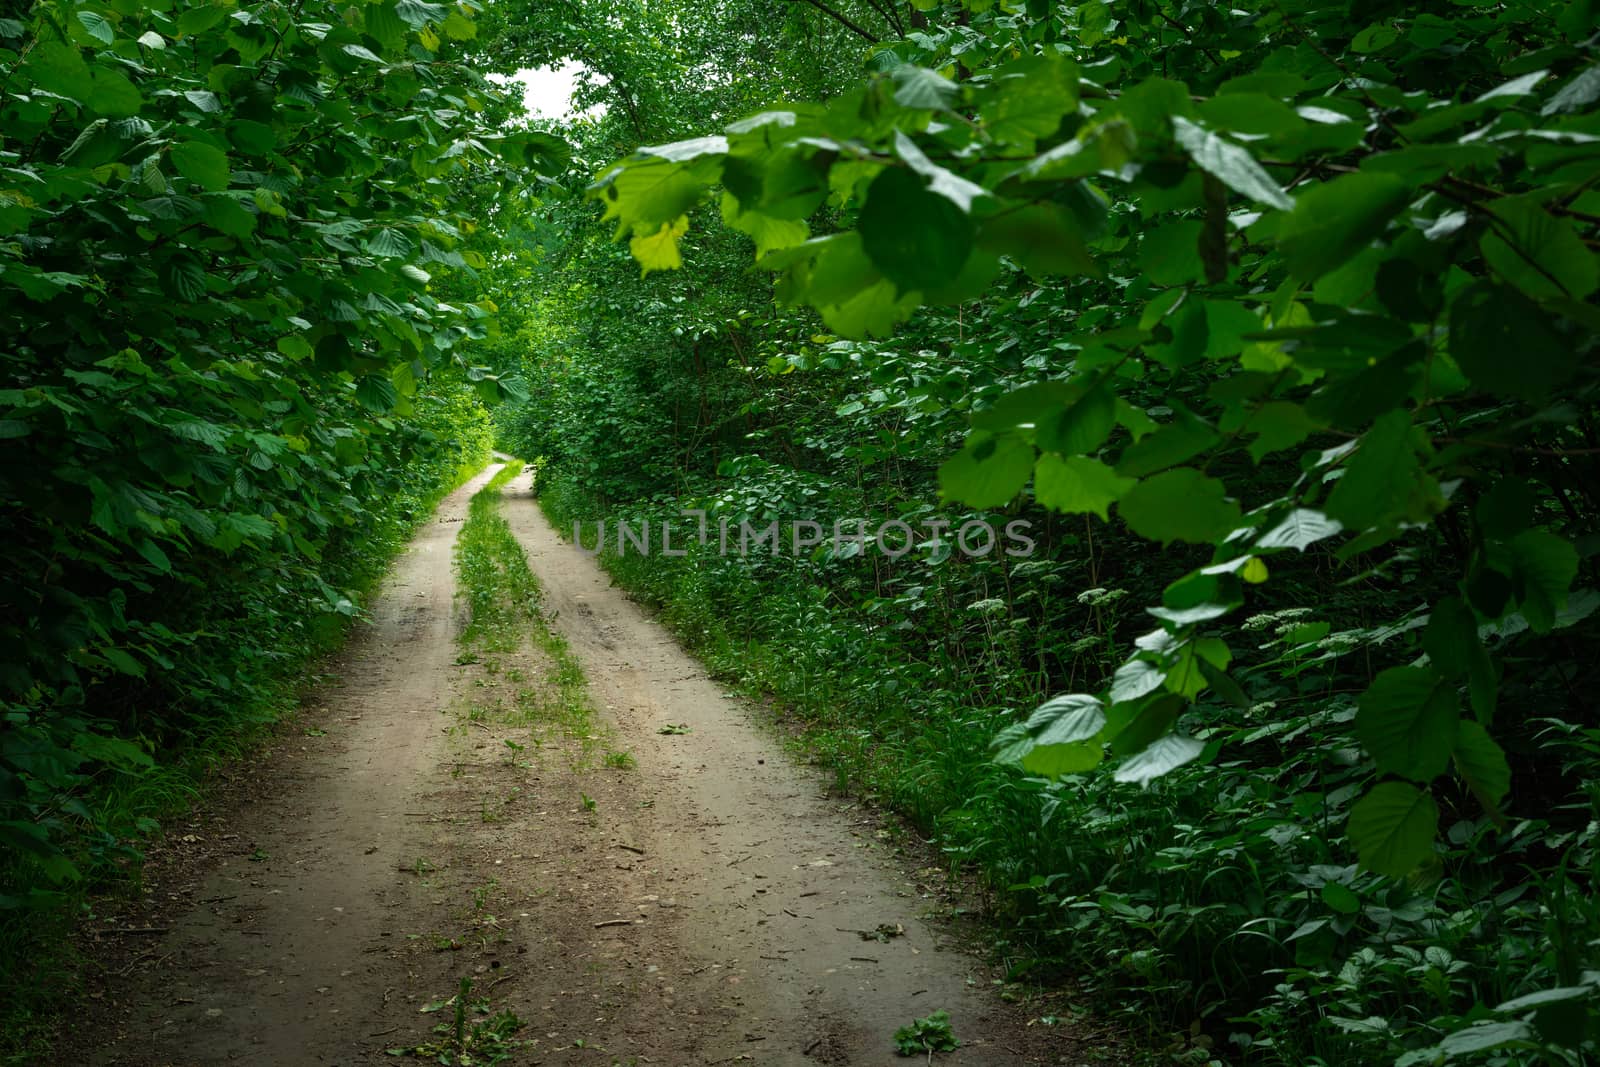 Dirt road through green dense deciduous forest, summer view